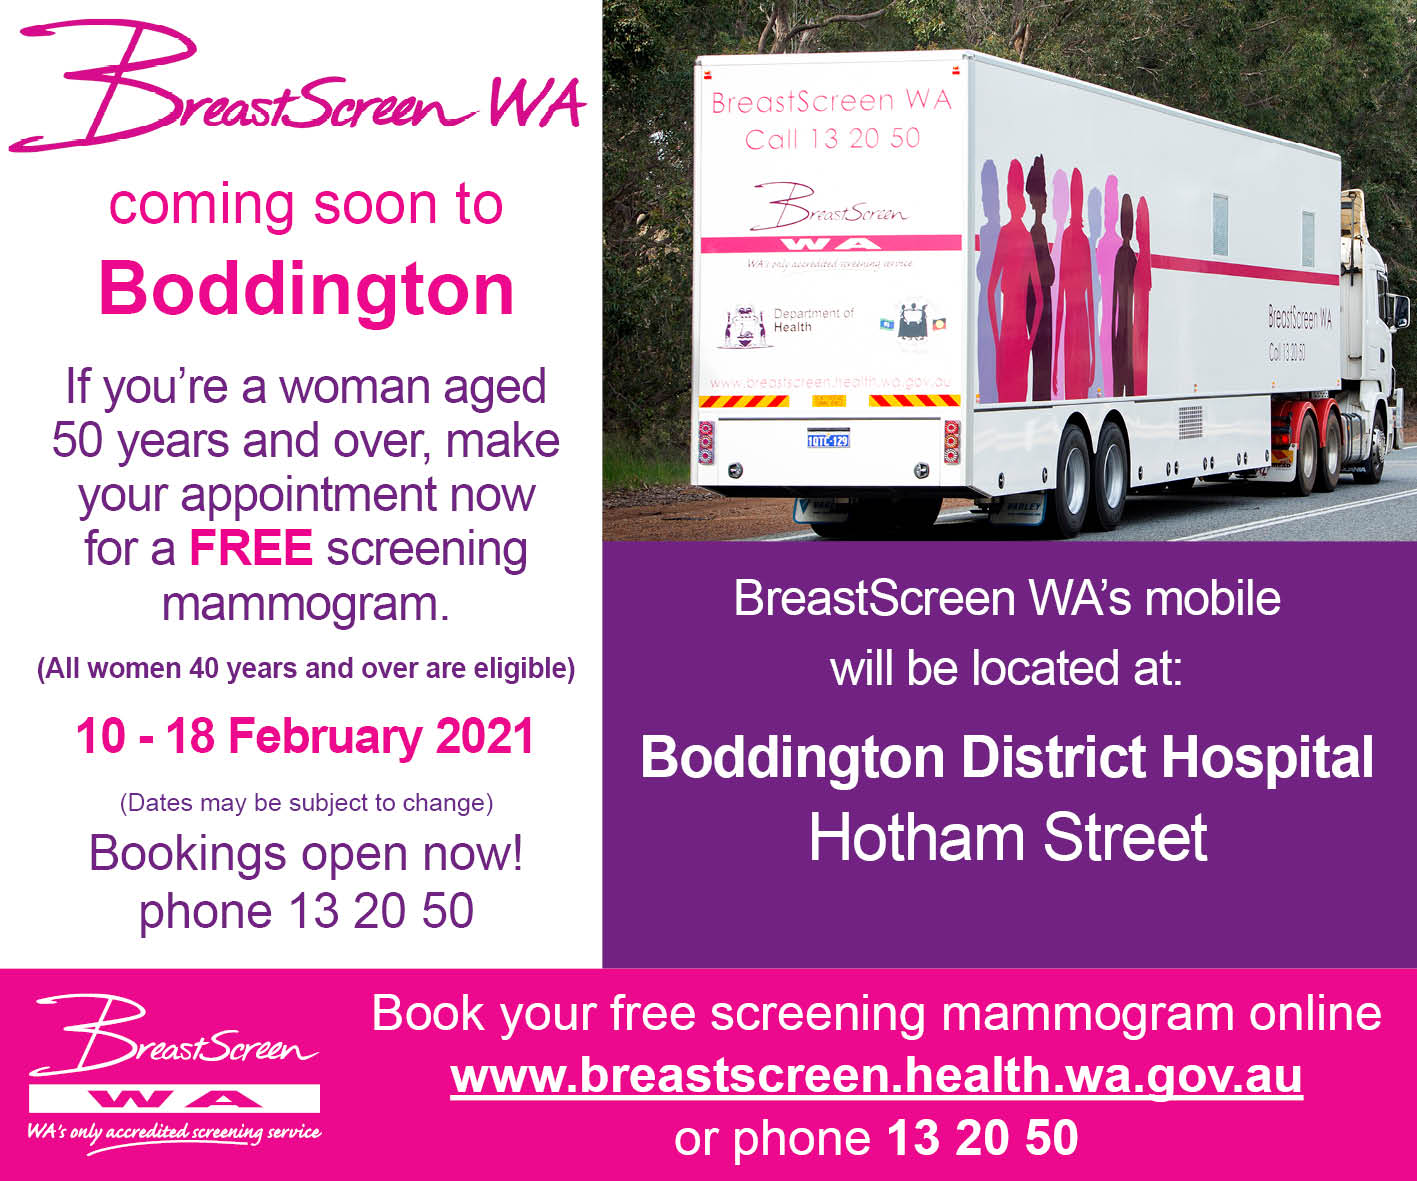 Breastscreen WA visit to Boddington